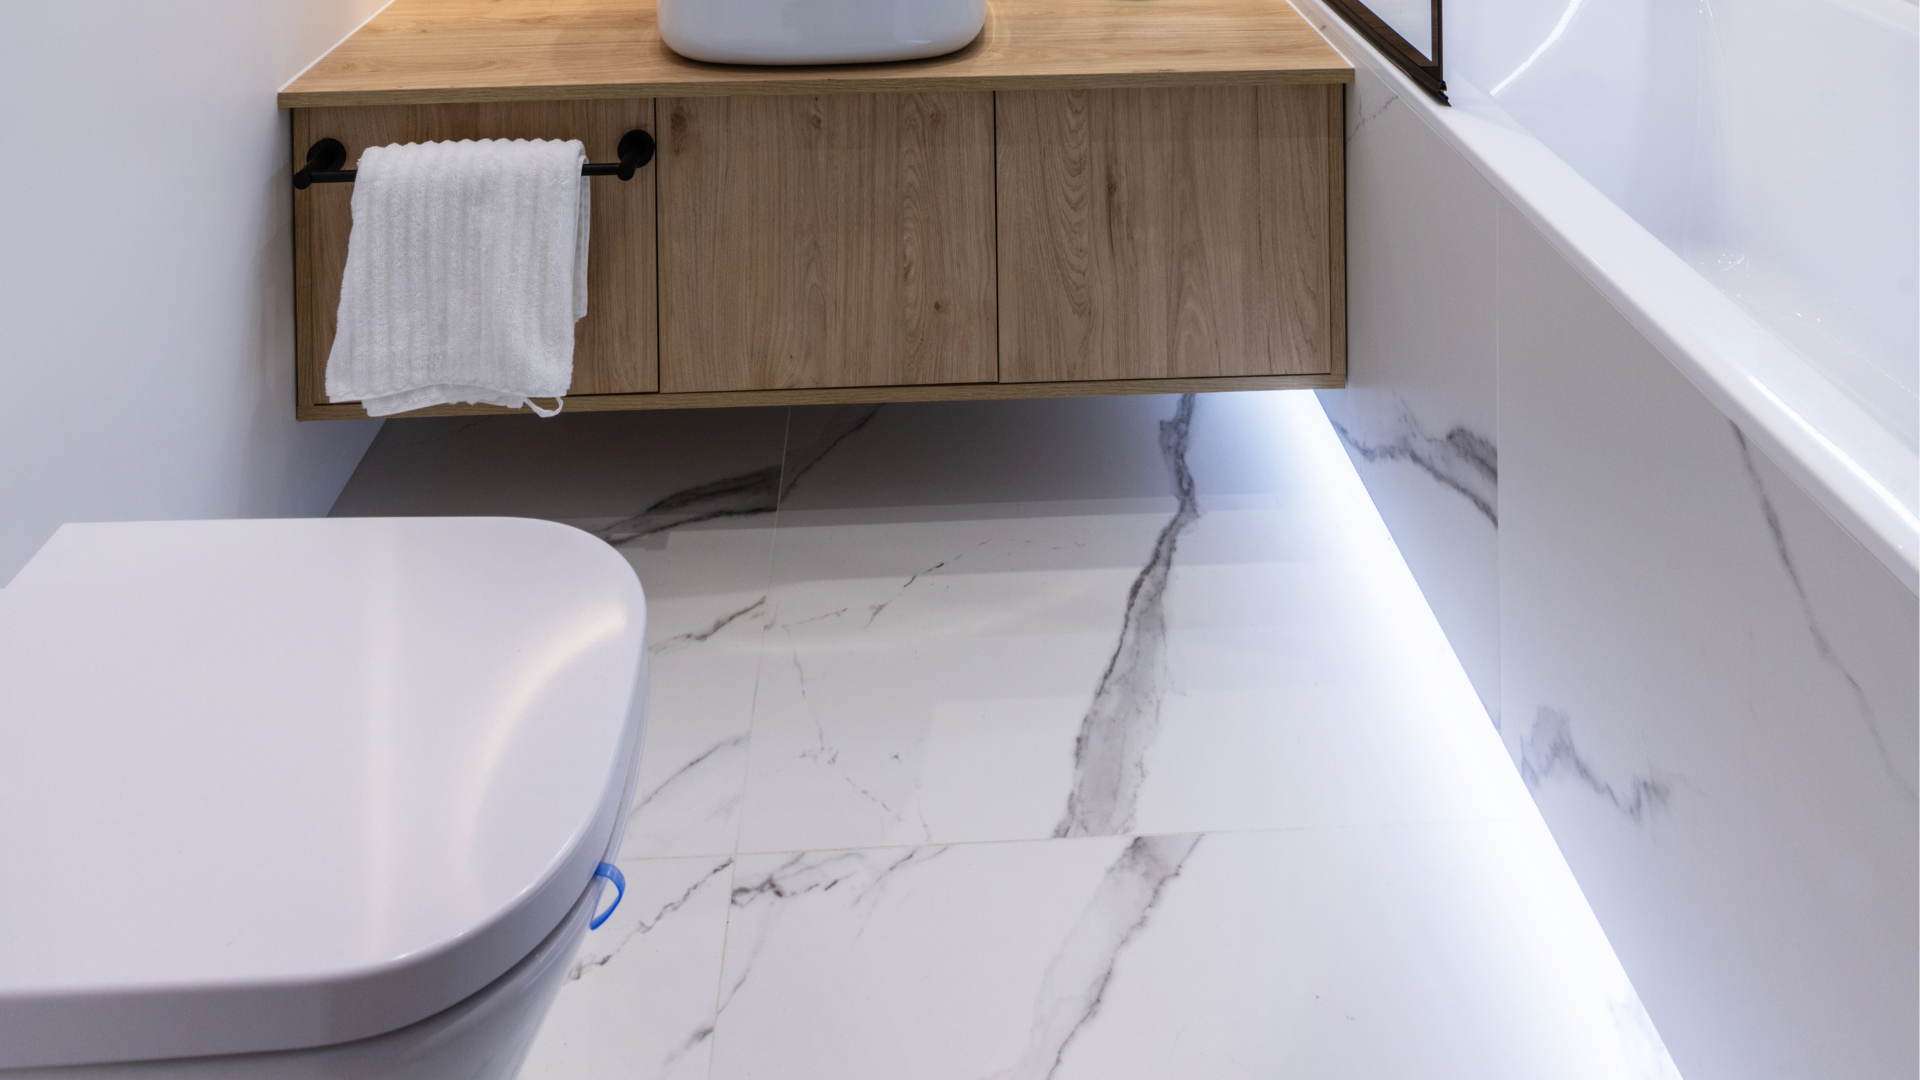 White Marble Floor and Bath Tile for Seamless Flooring - Small Bathroom Design Ideas